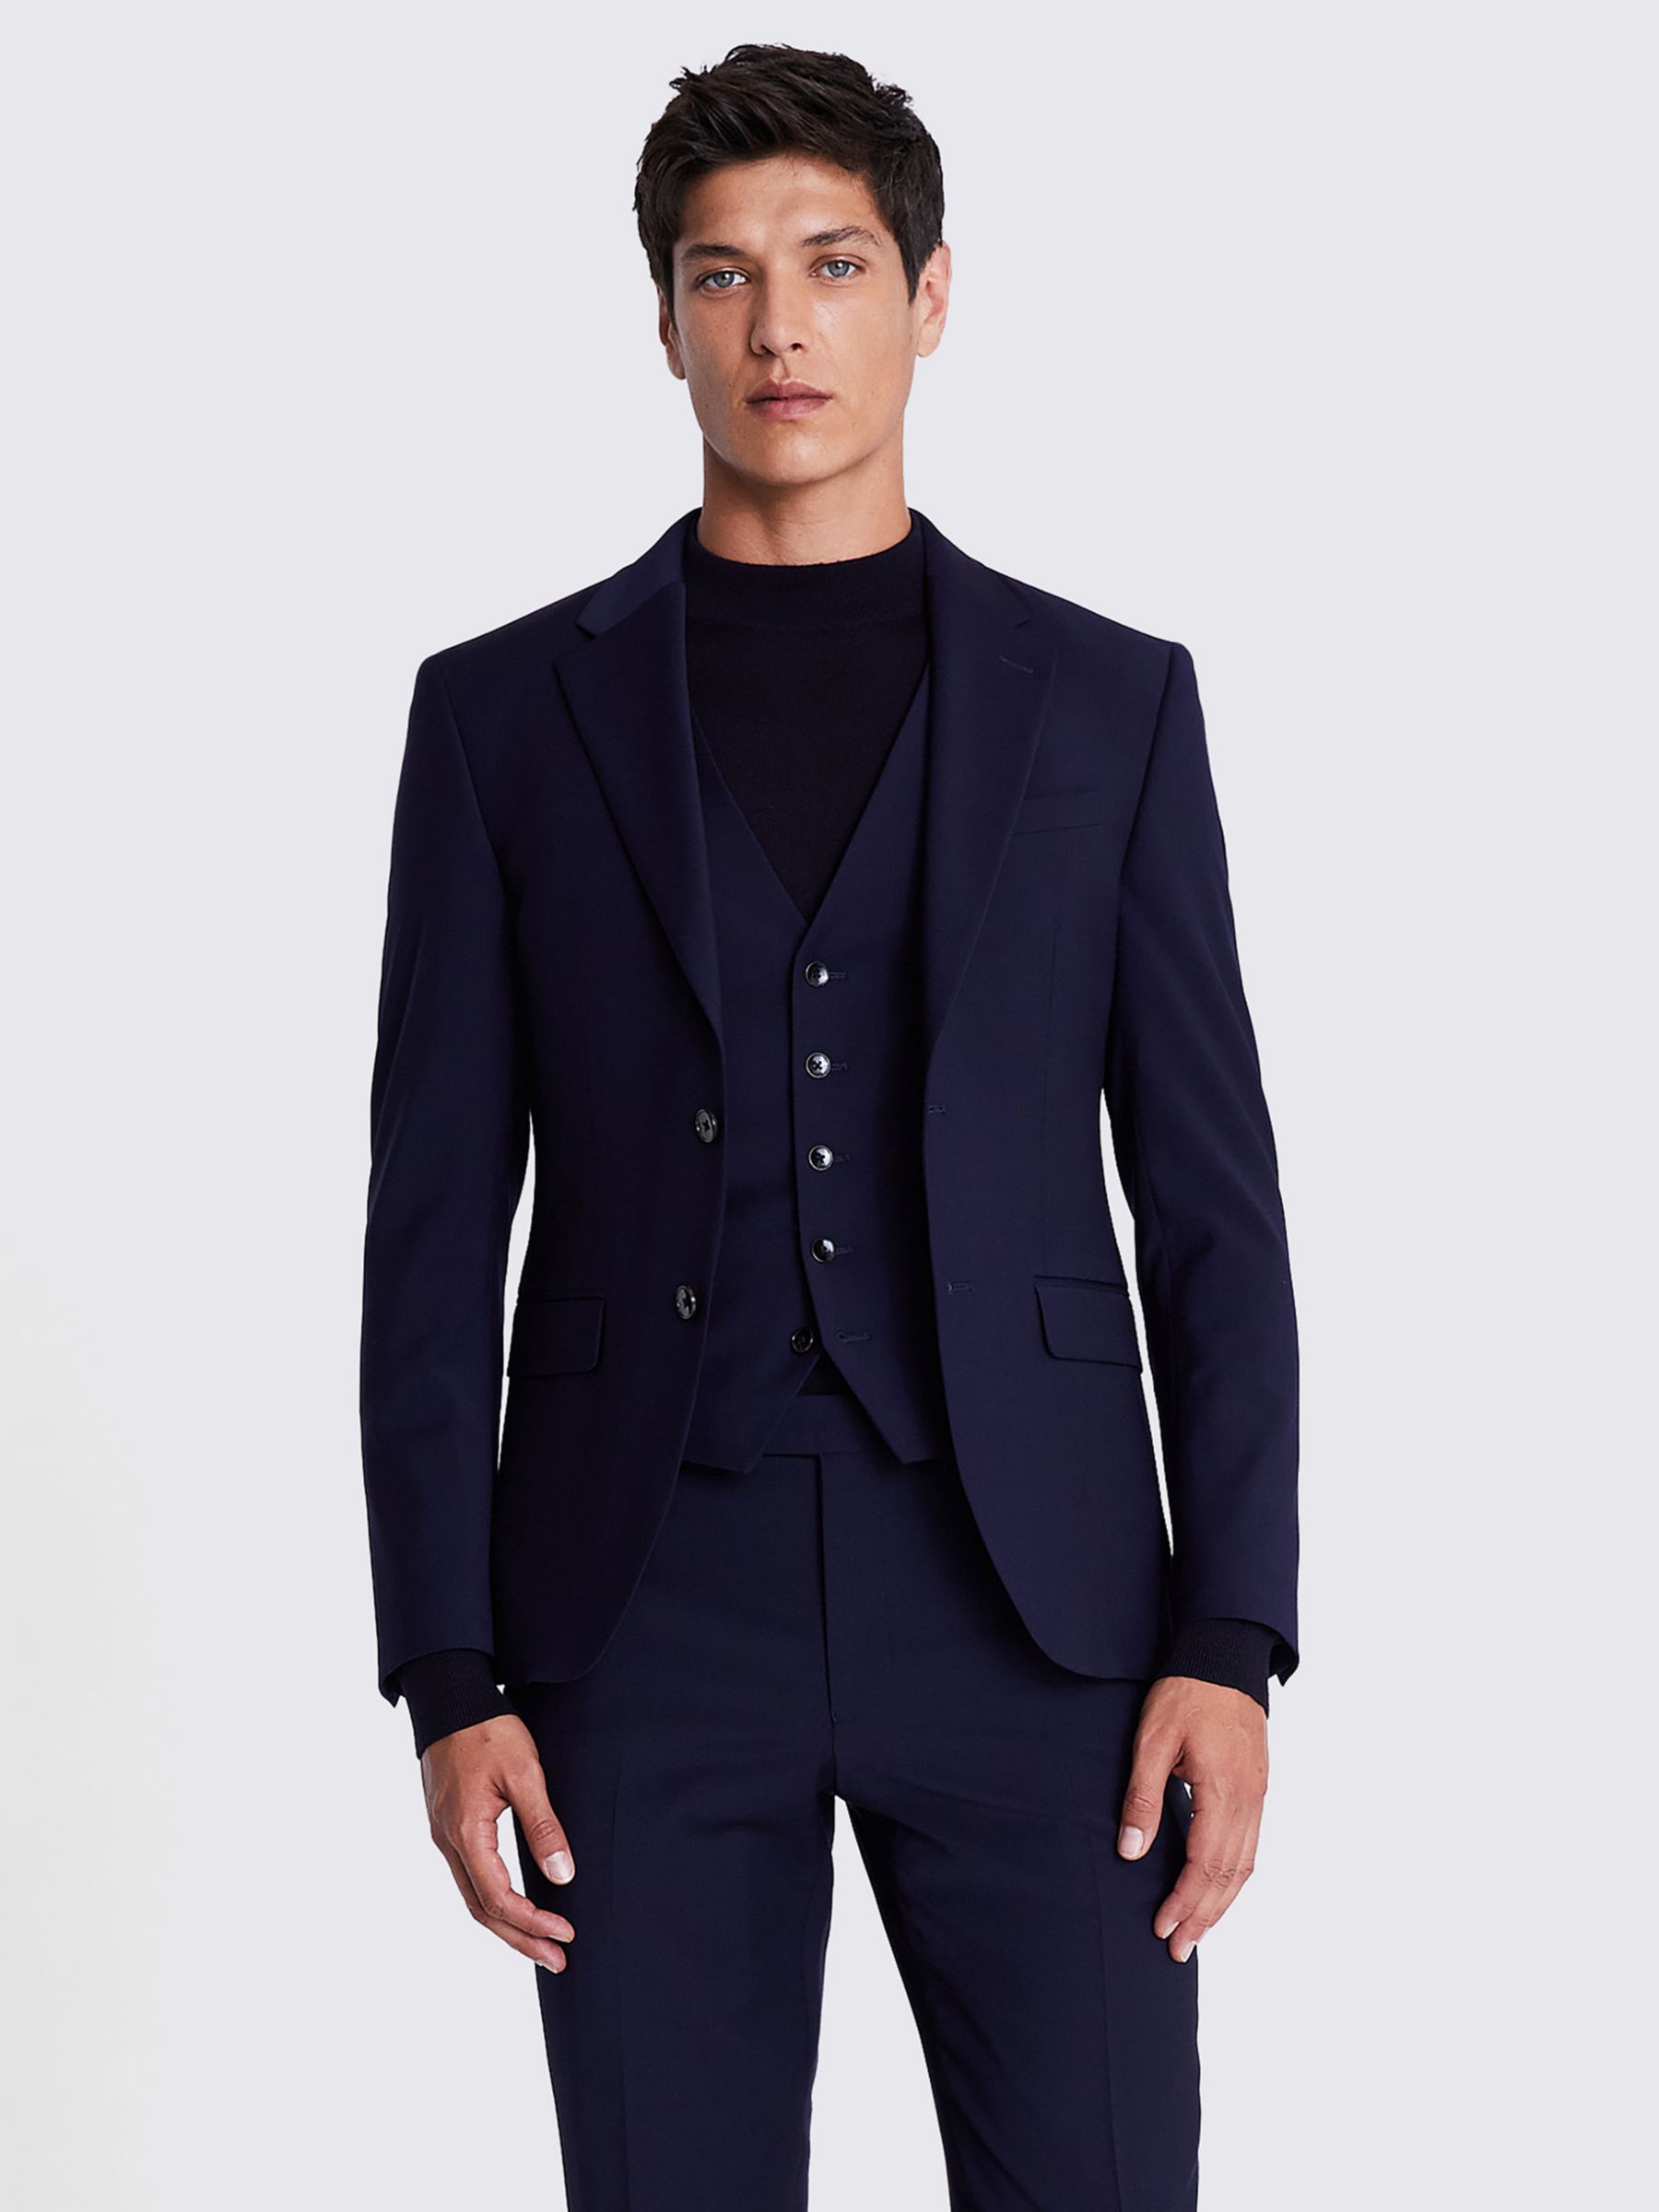 Moss x DKNY Wool Blend Slim Fit Suit Jacket, Ink at John Lewis & Partners